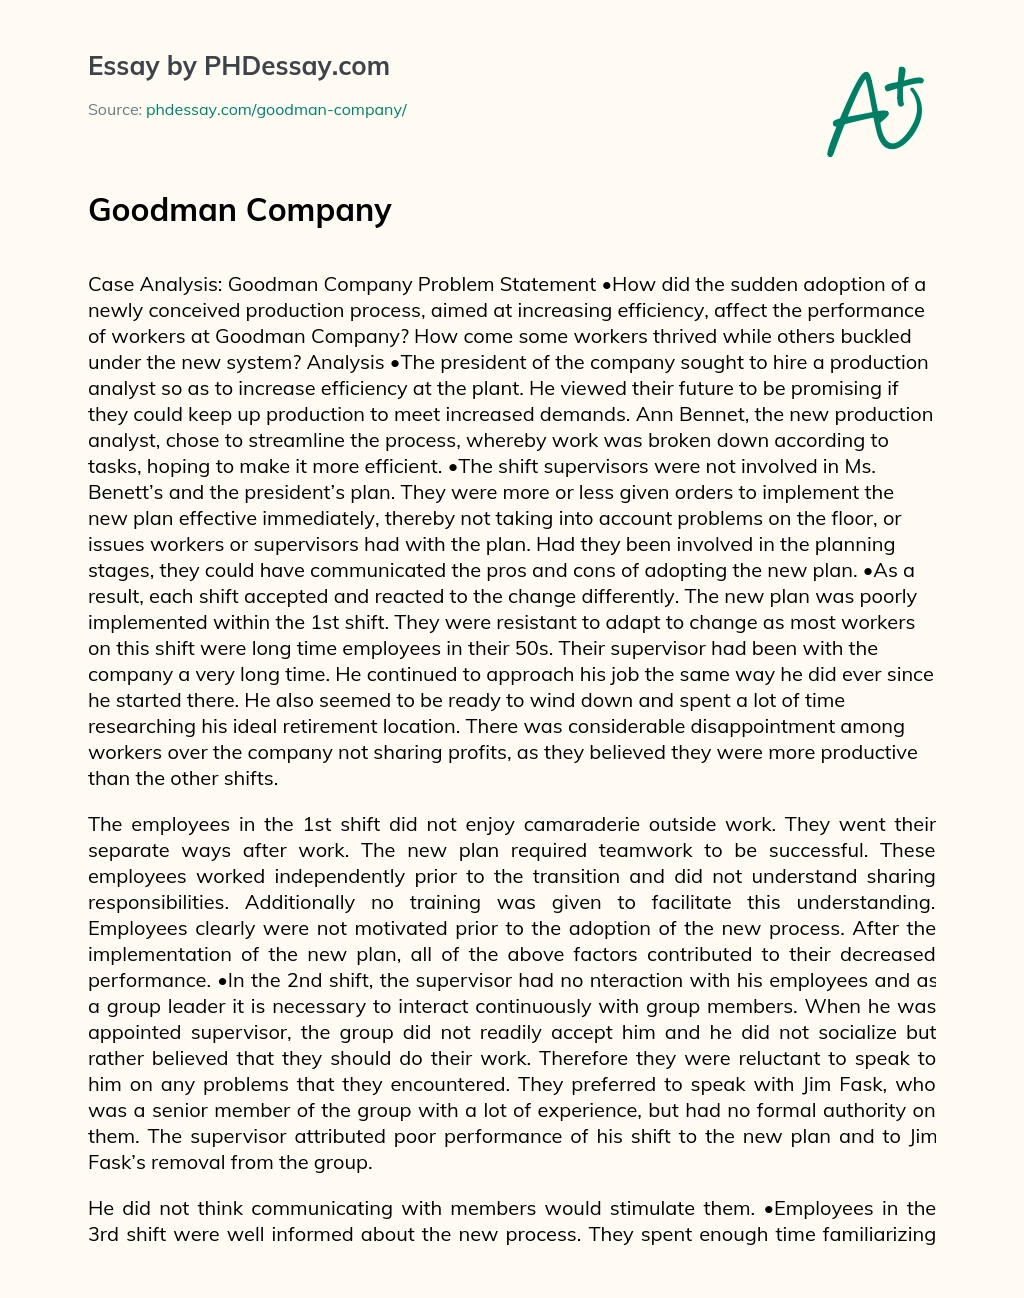 Goodman Company essay